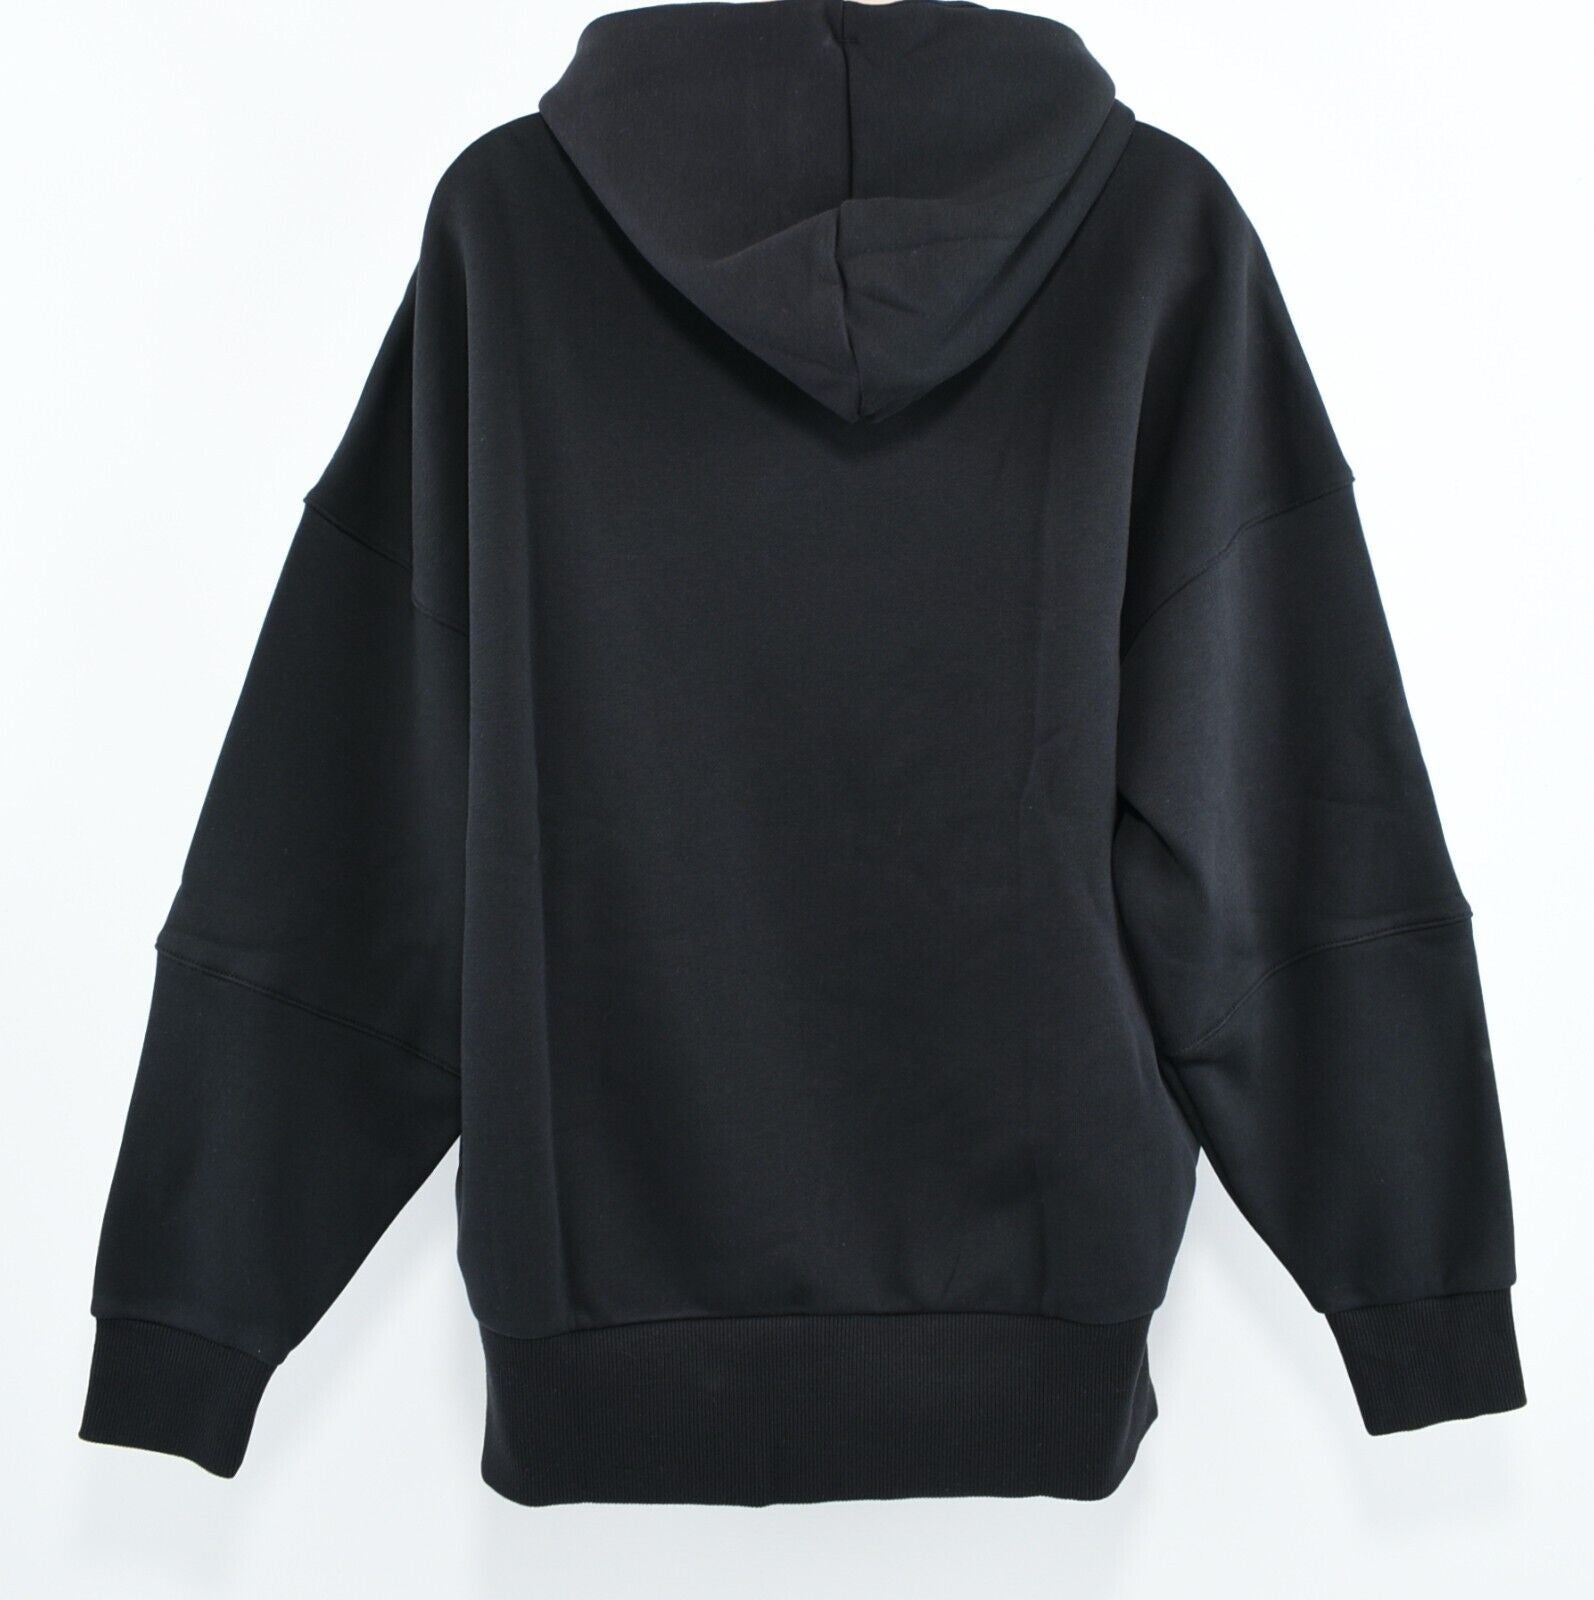 REEBOK Women's STUDIO RECYCLED Oversized Hoodie Sweatshirt, Black, XS /UK 4-6